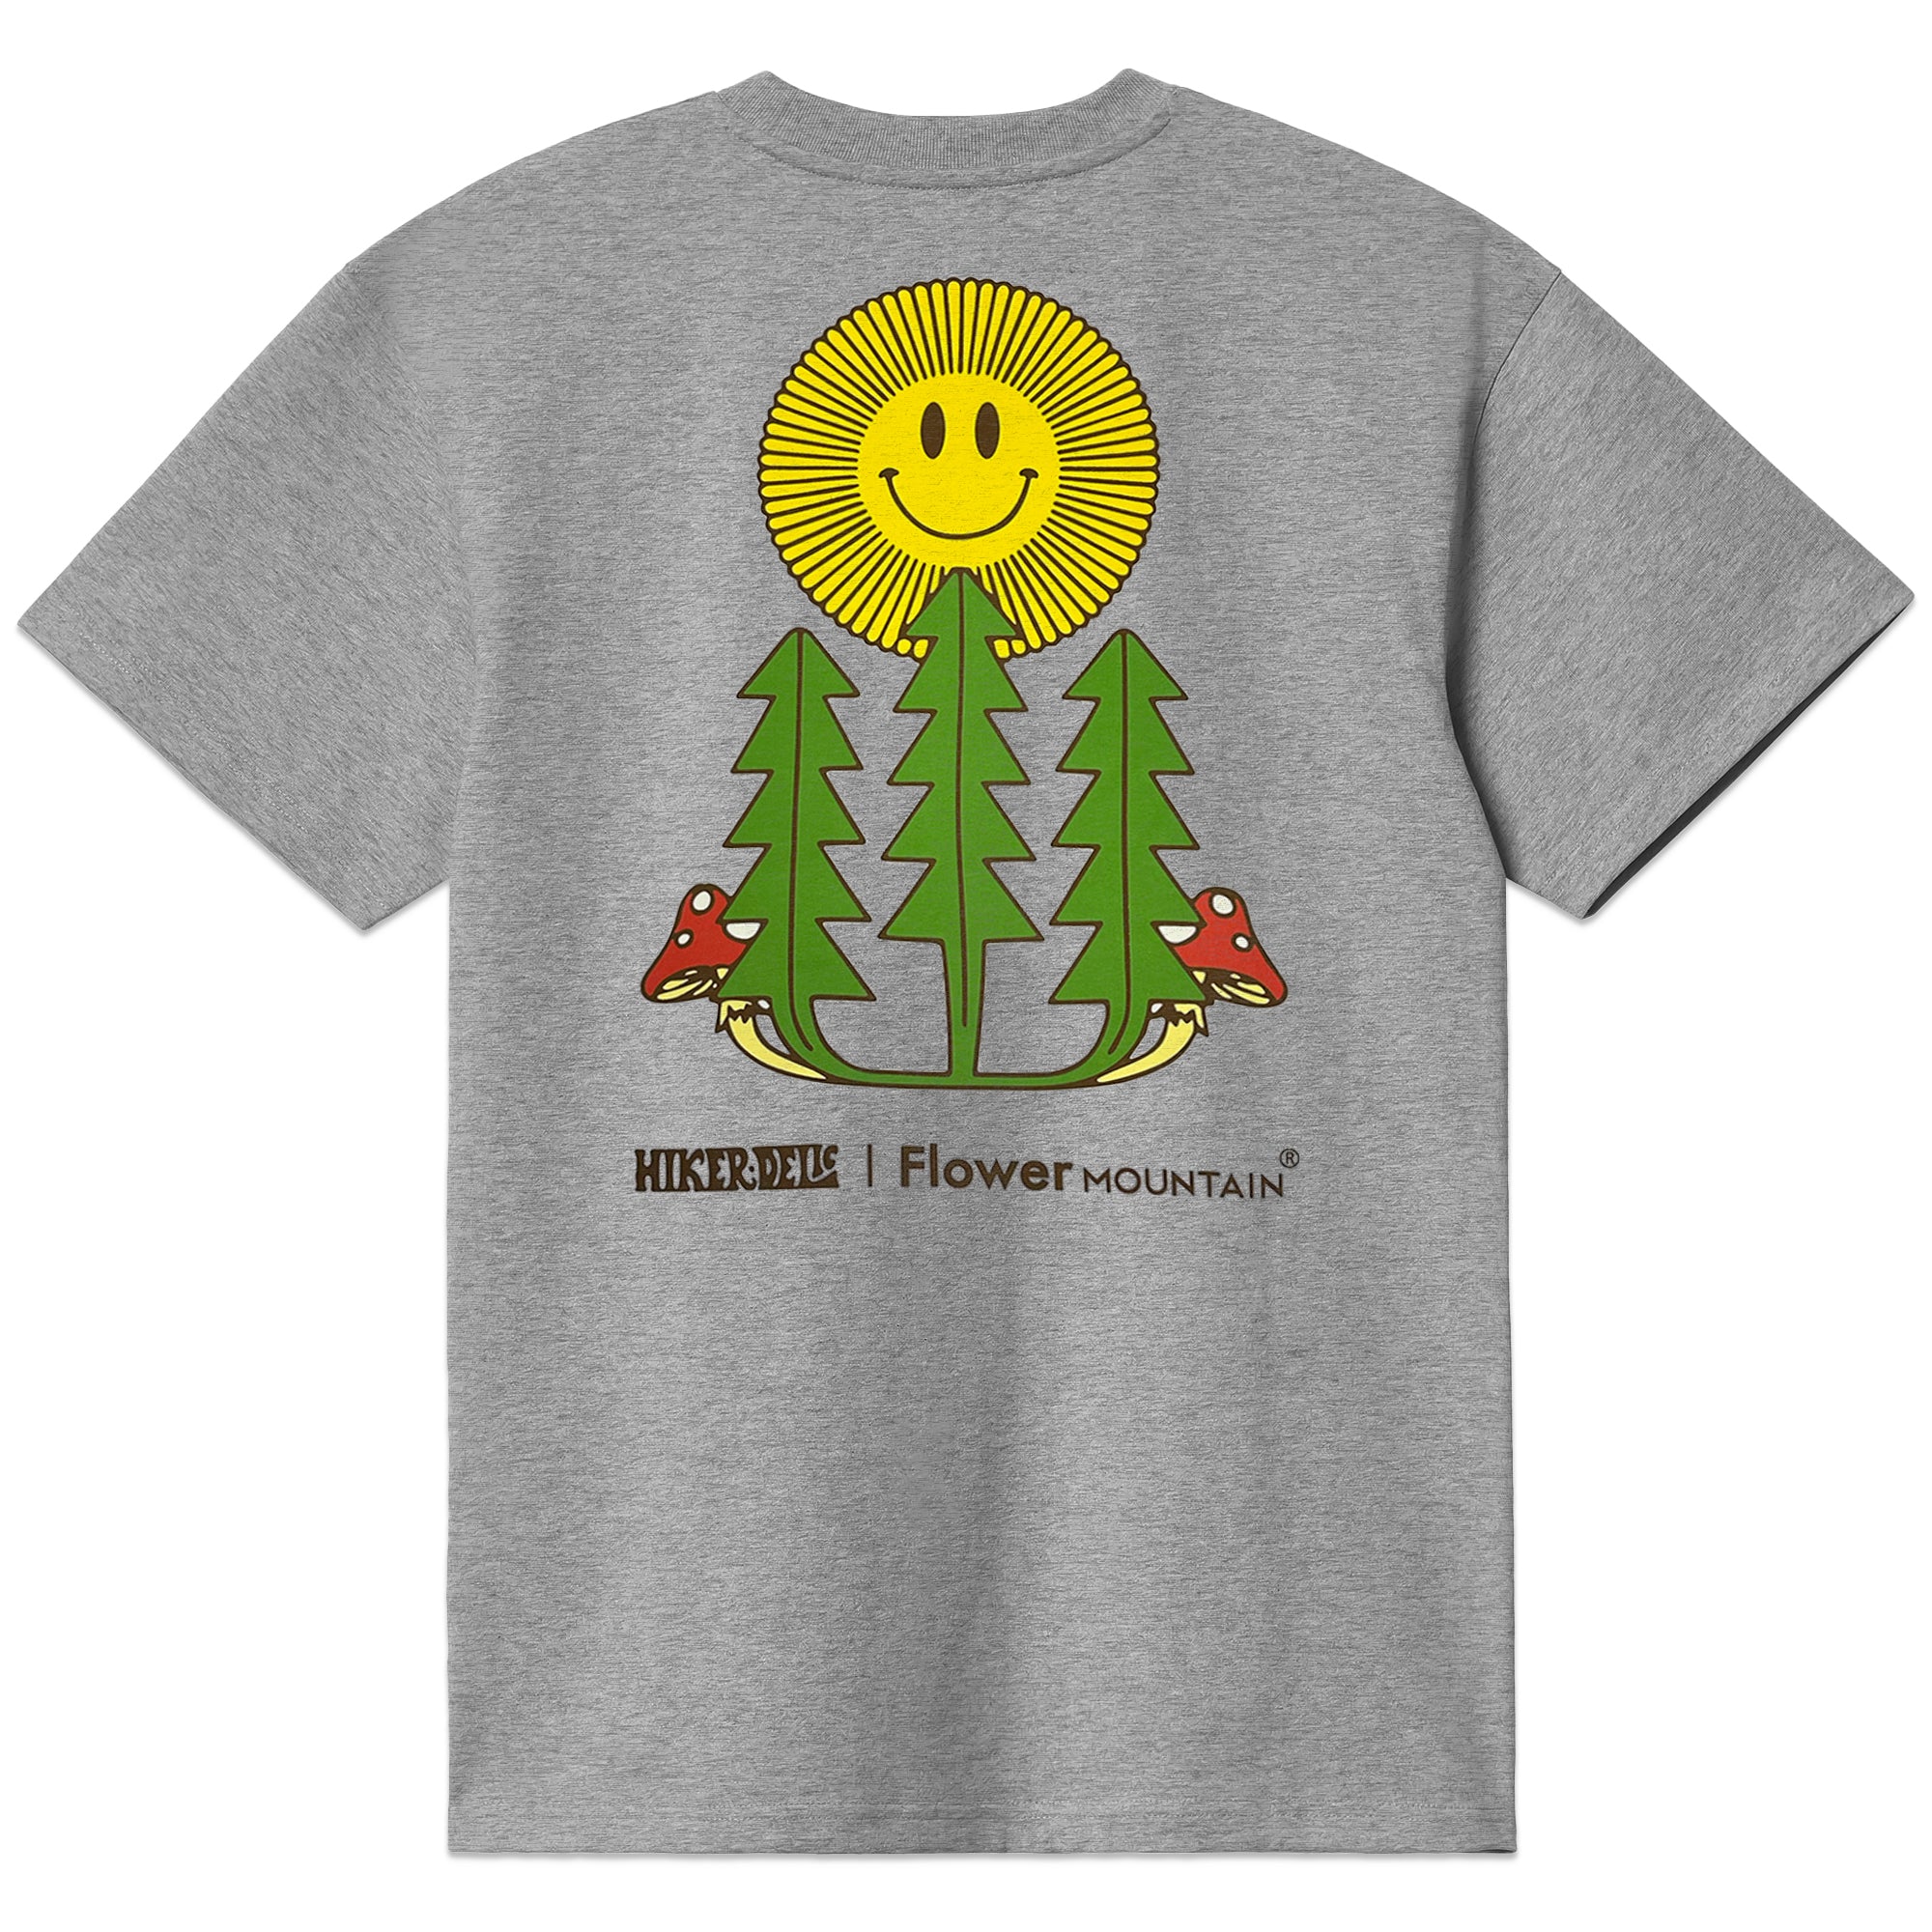 Hikerdelic x Flower Mountain Personal Growth T-Shirt - Grey Marl